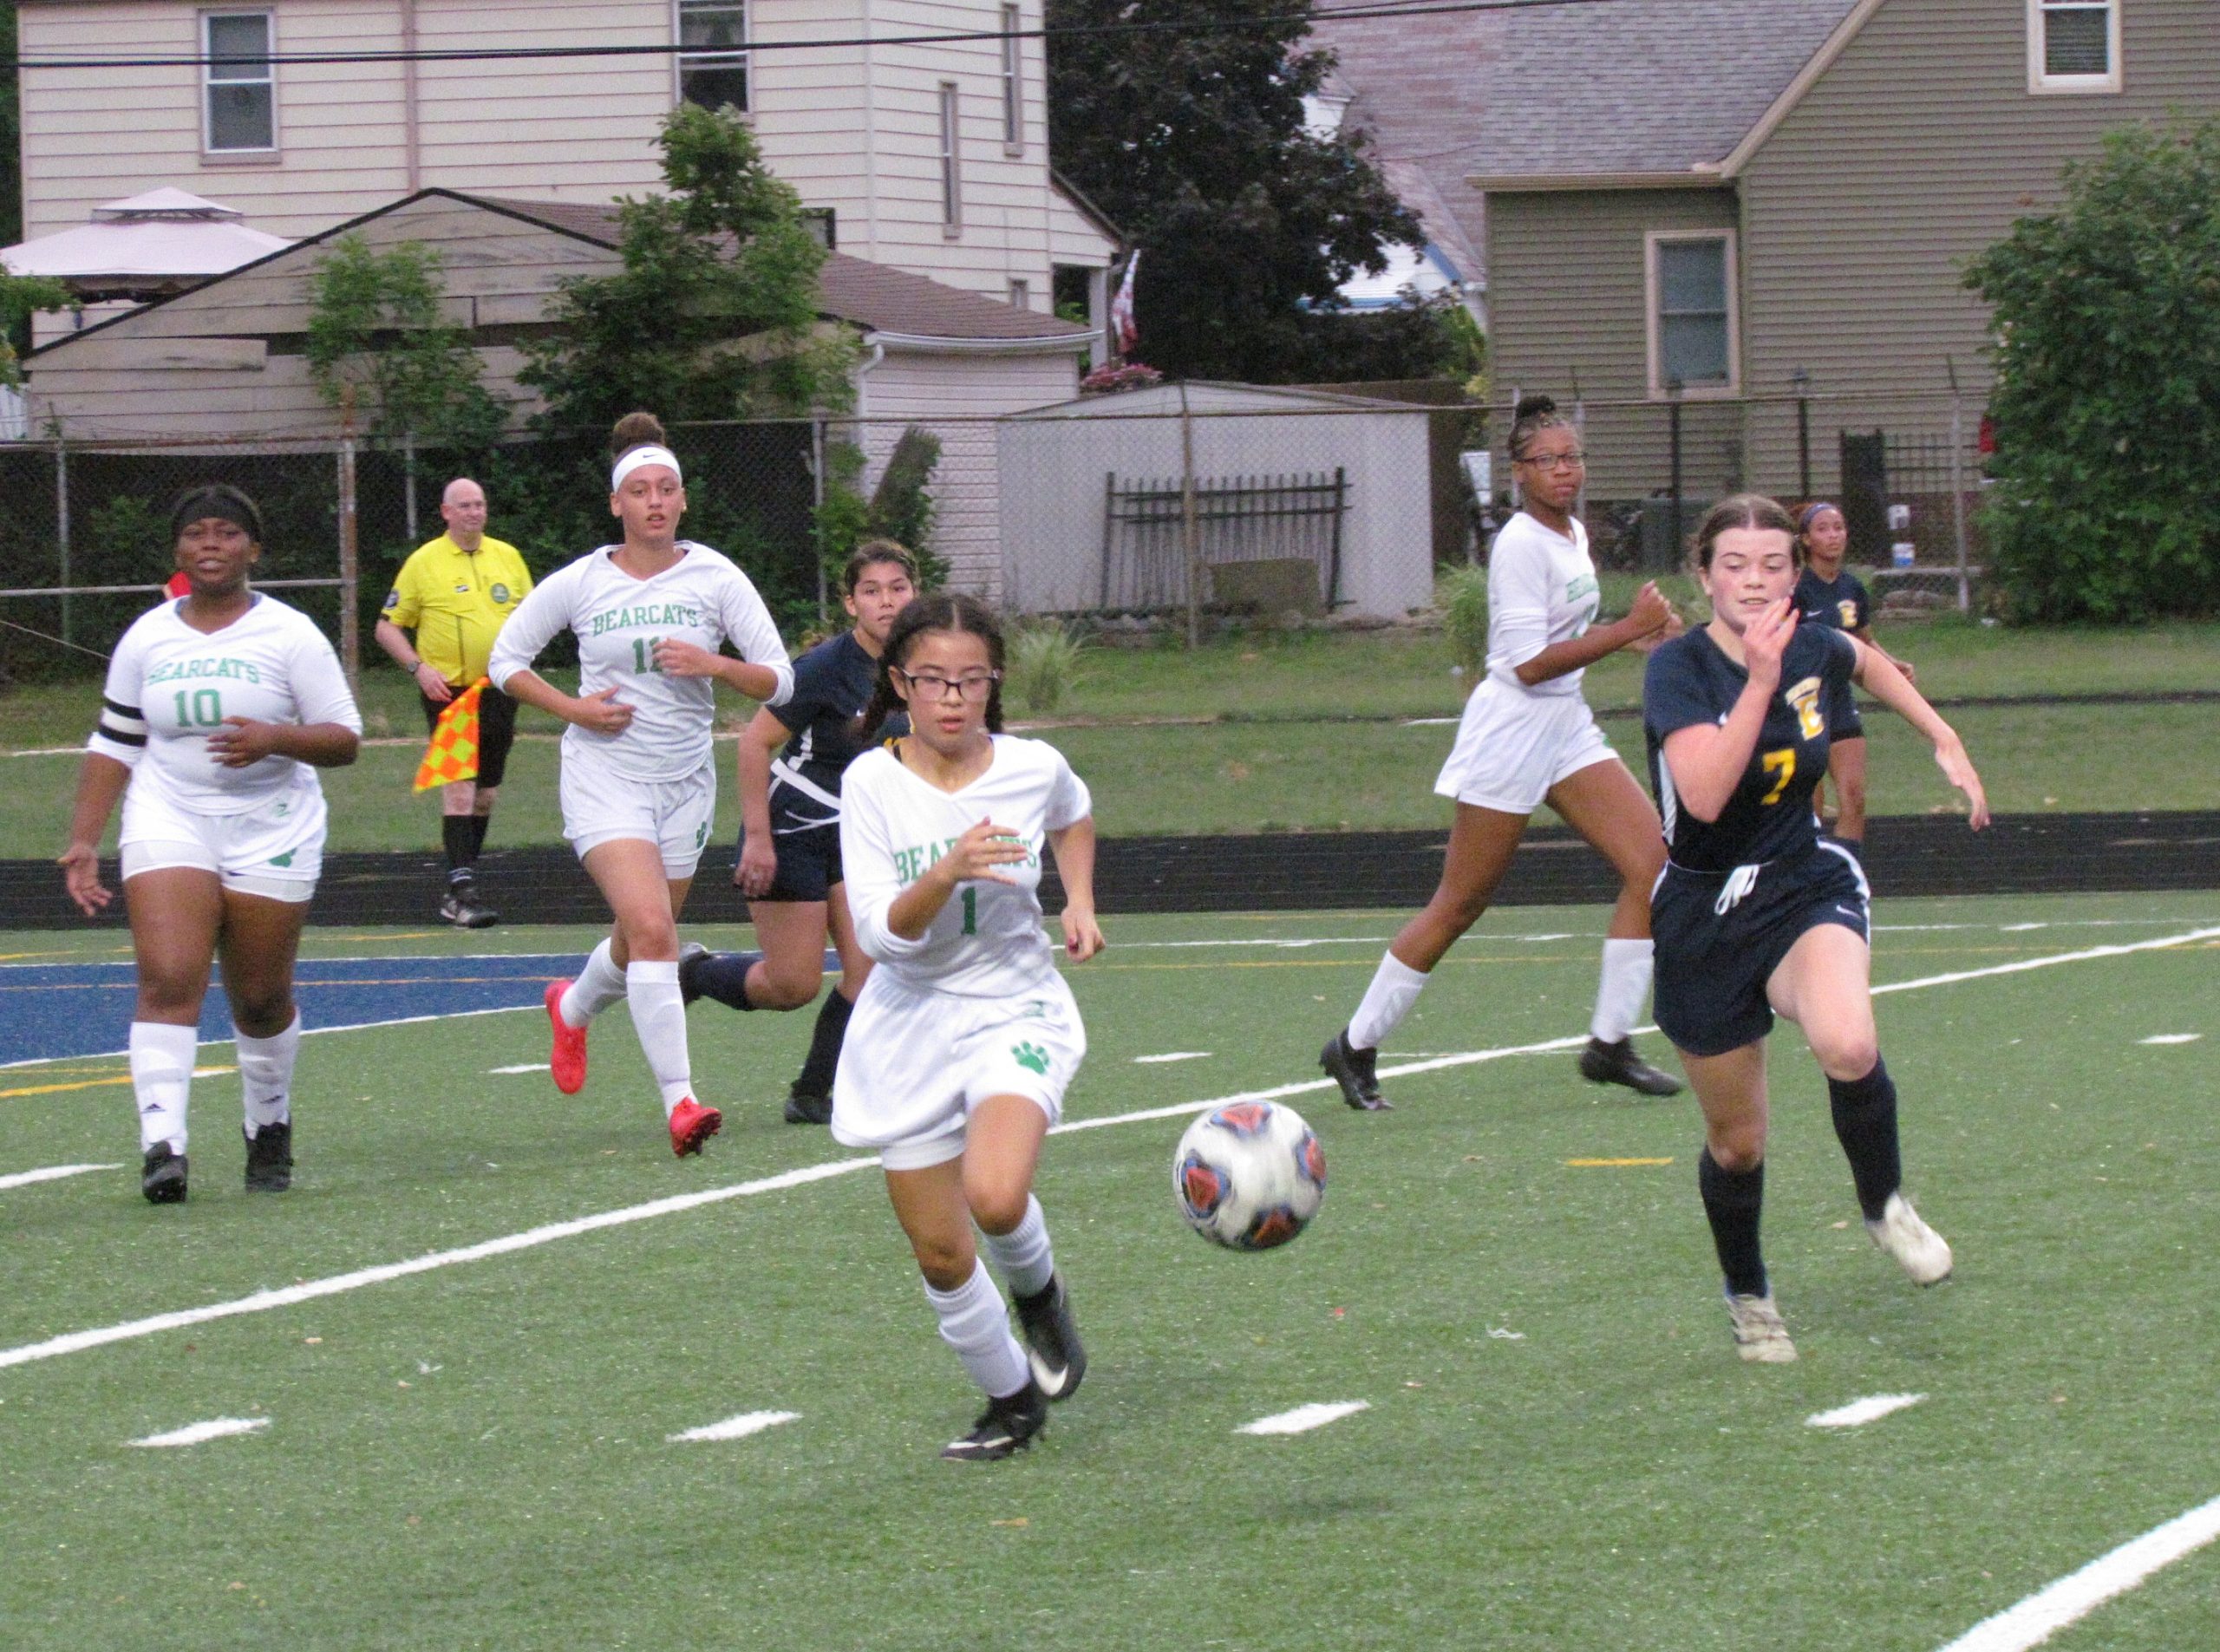 Bedford girls soccer team keeps growing together despite 2-0 loss (photos)